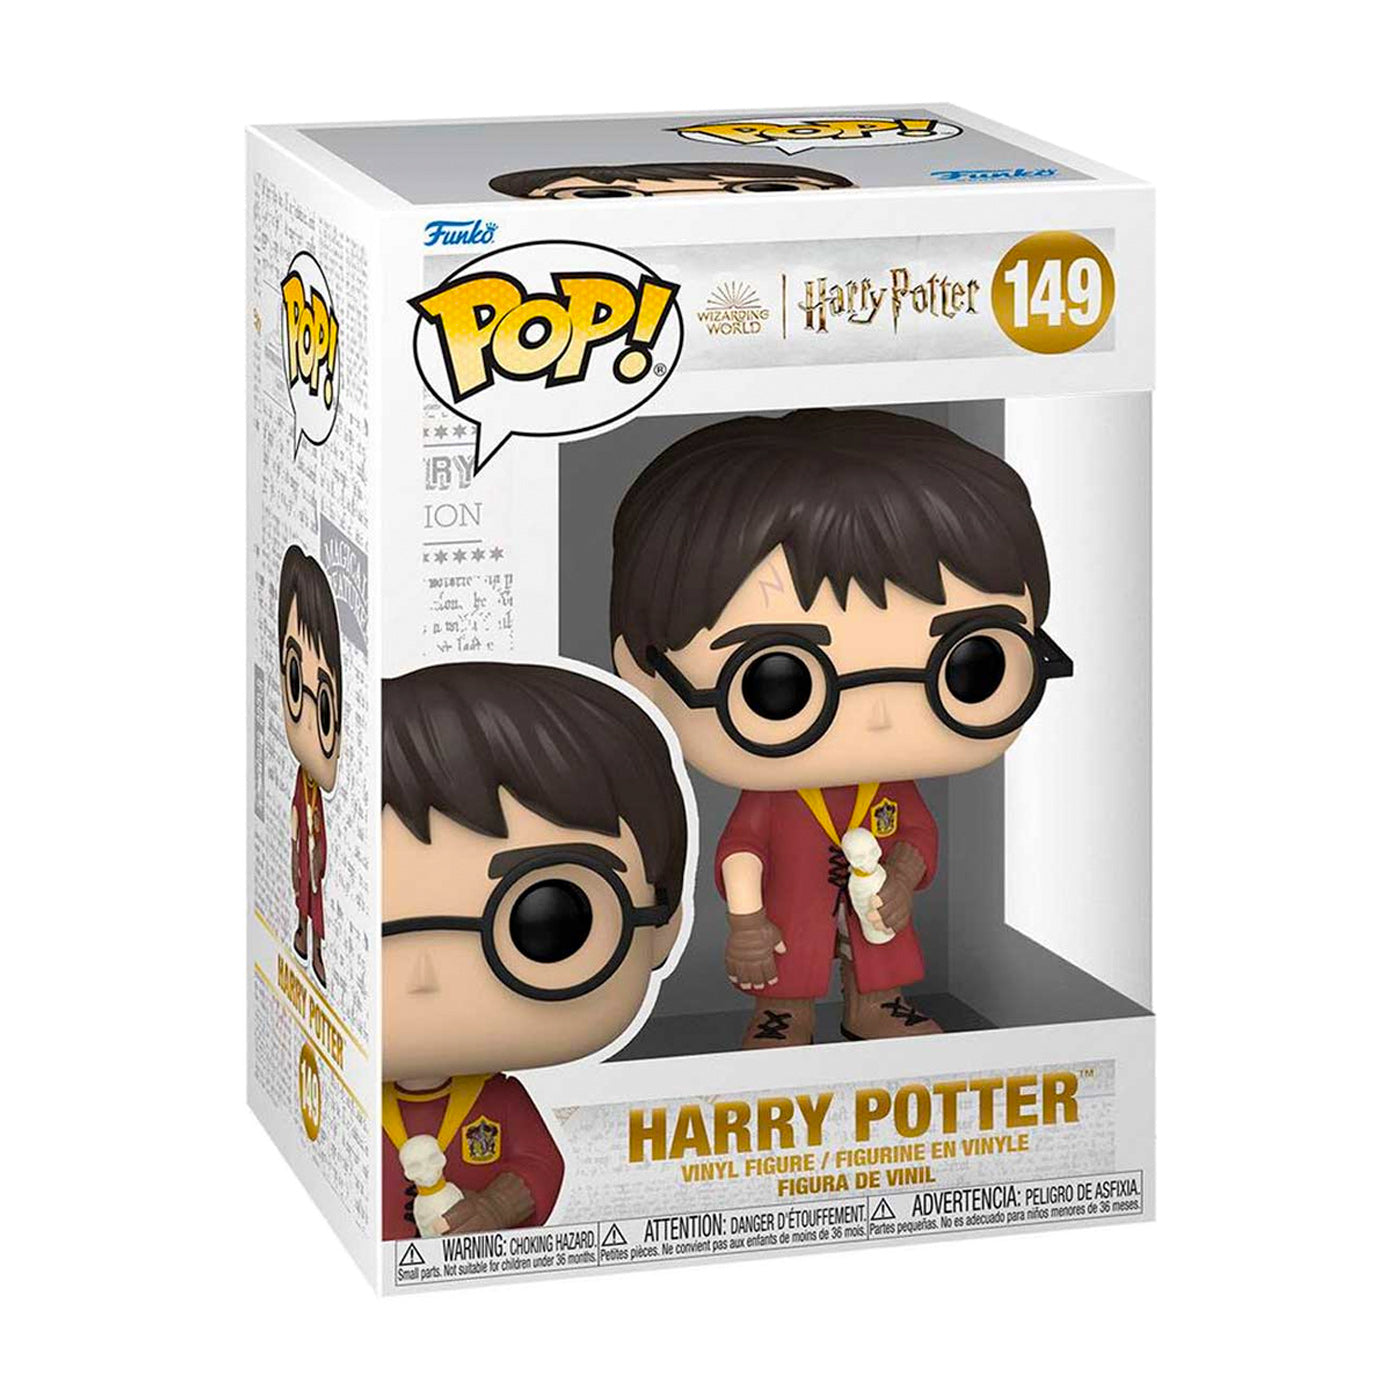 Funko Pop: Harry Potter (149)